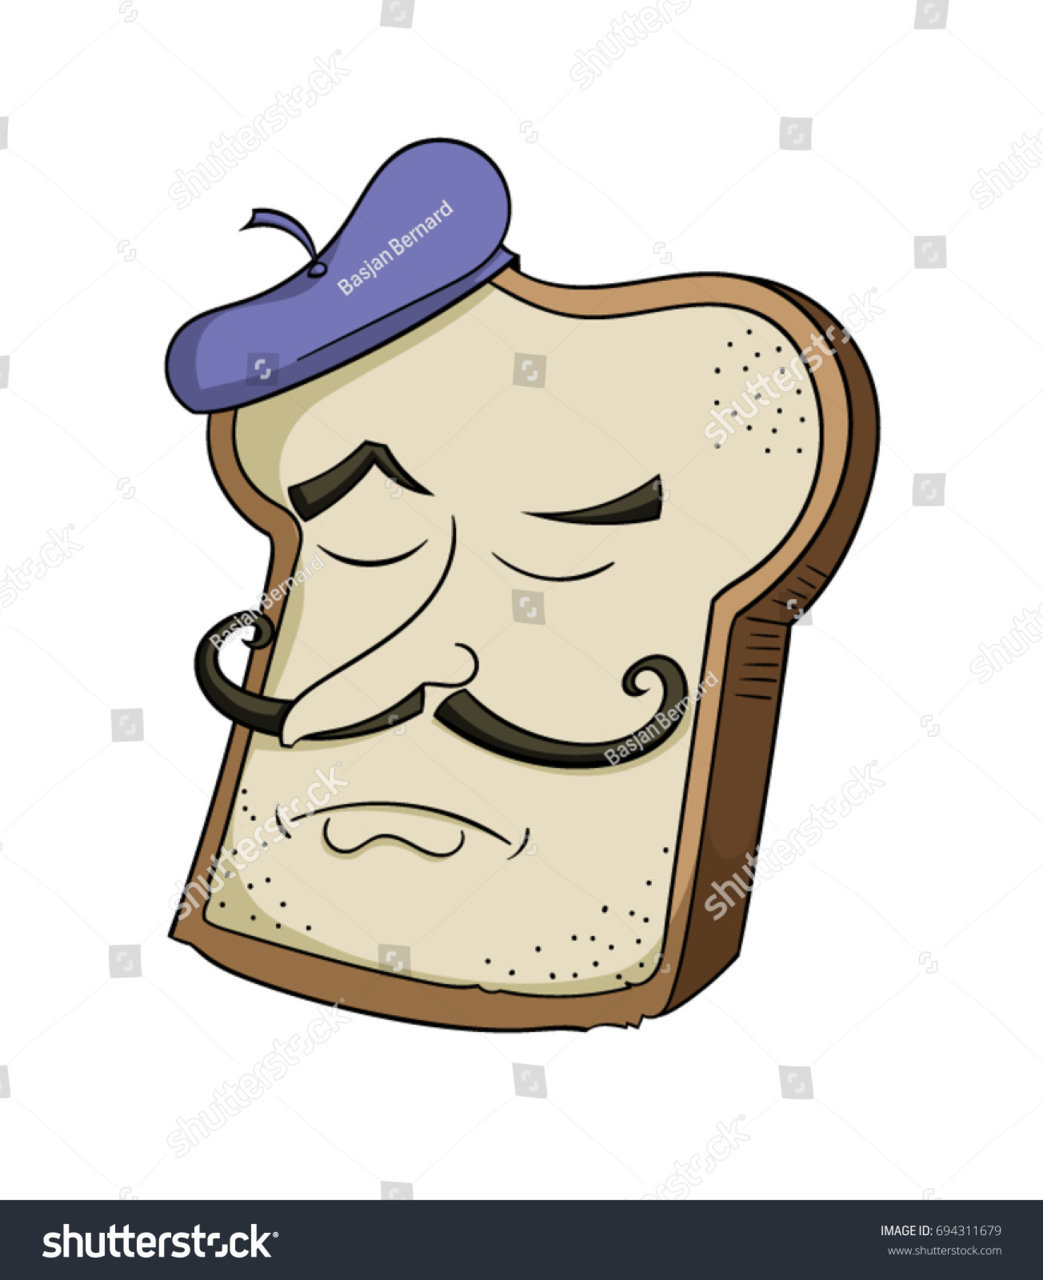 stock-vector-cartoon-french-toast-character-694311679.jpg